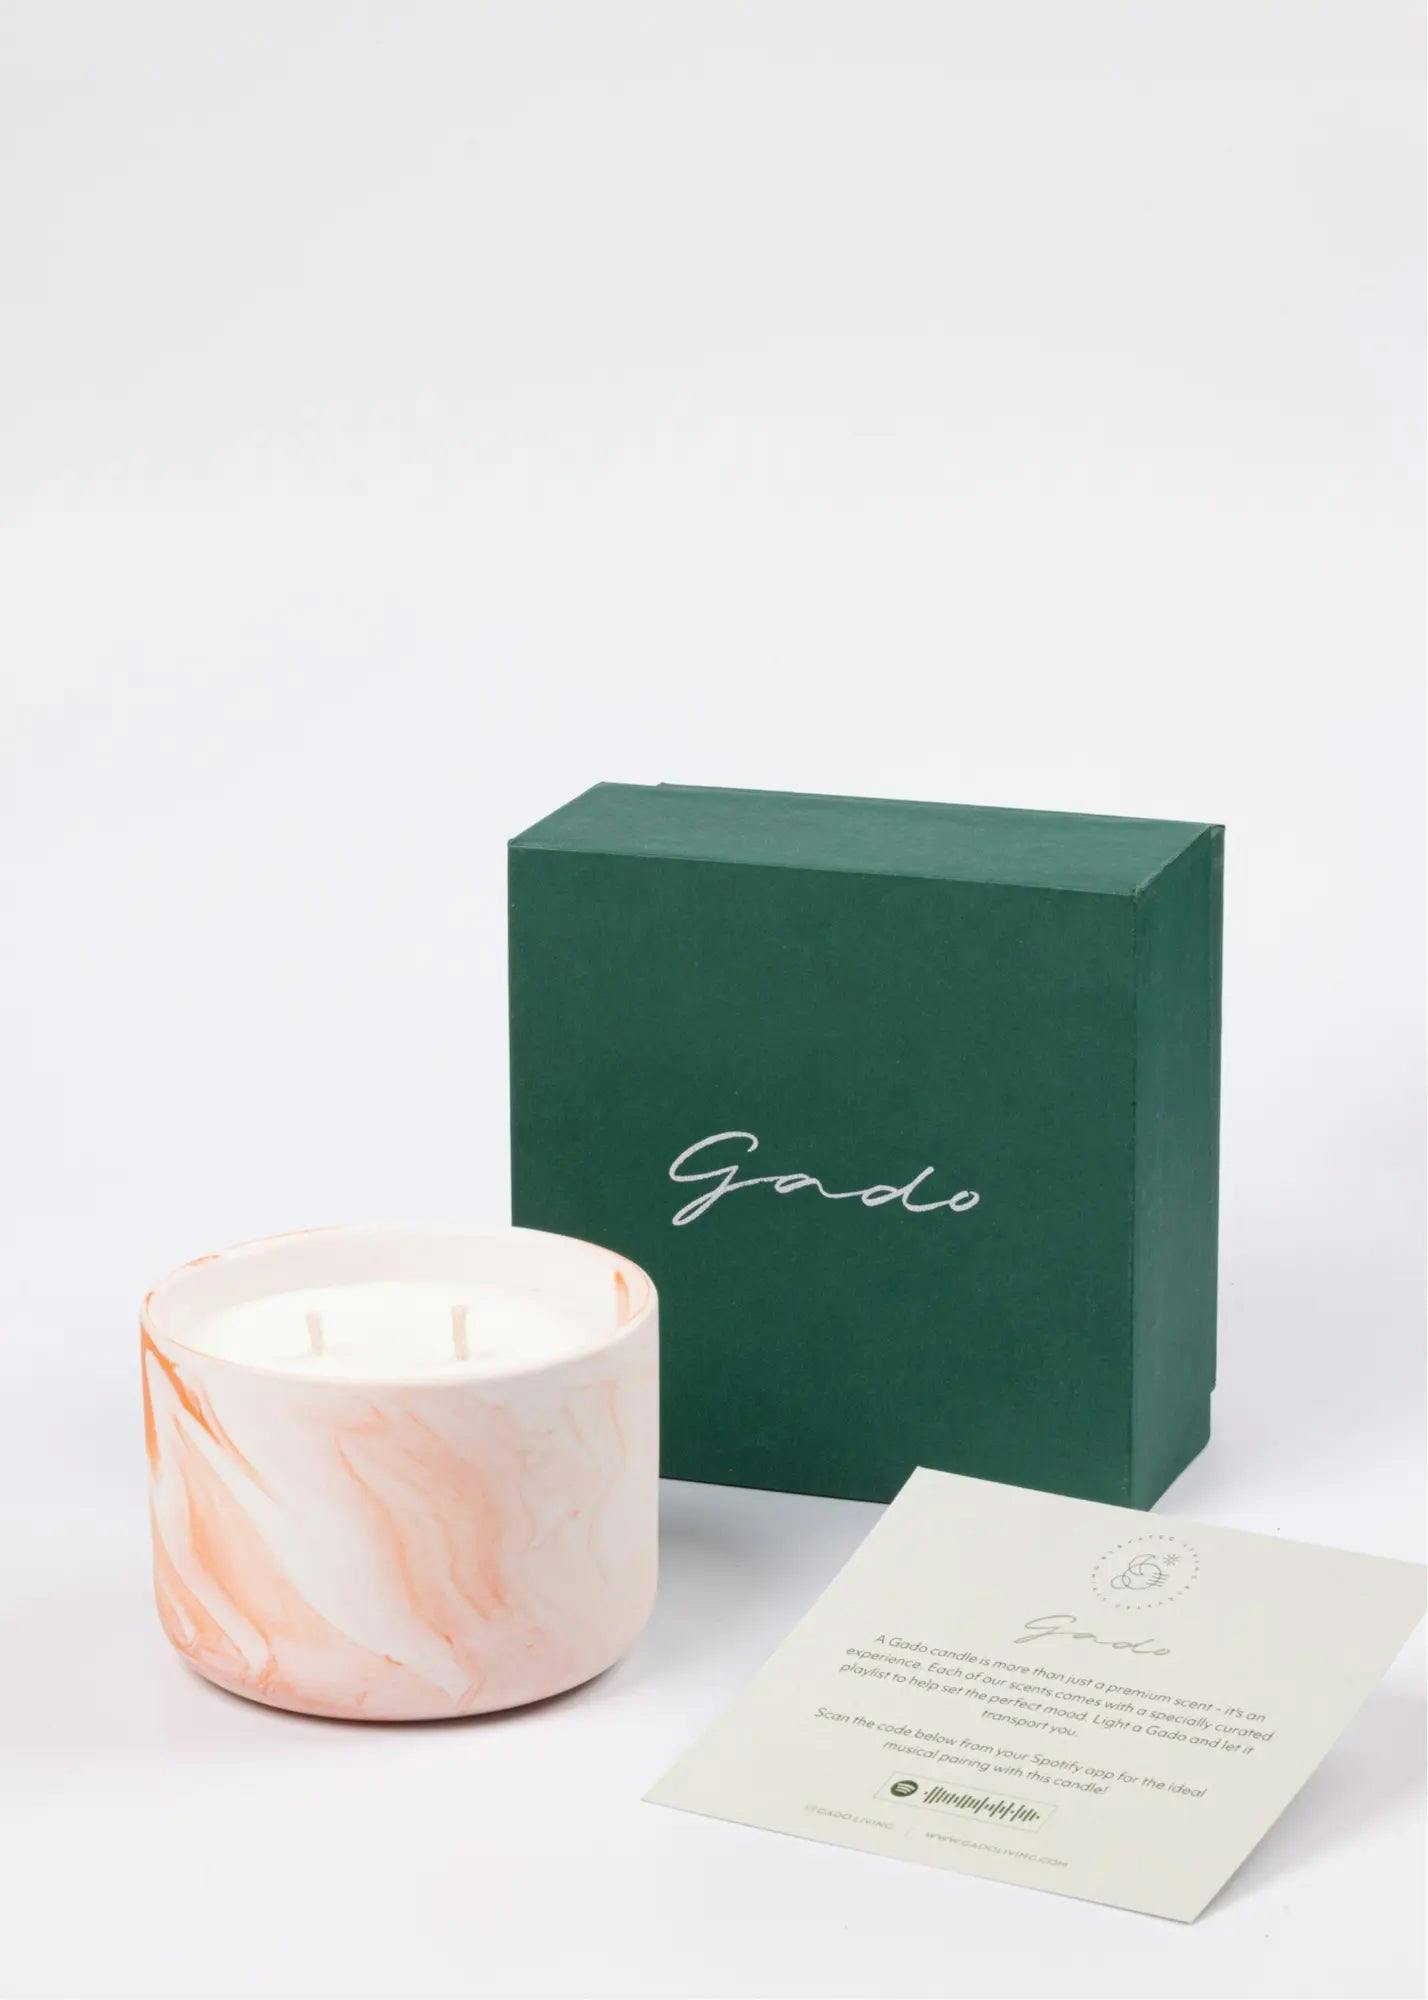 Zain Candle - Oak & Vanilla, a product by Gado Living